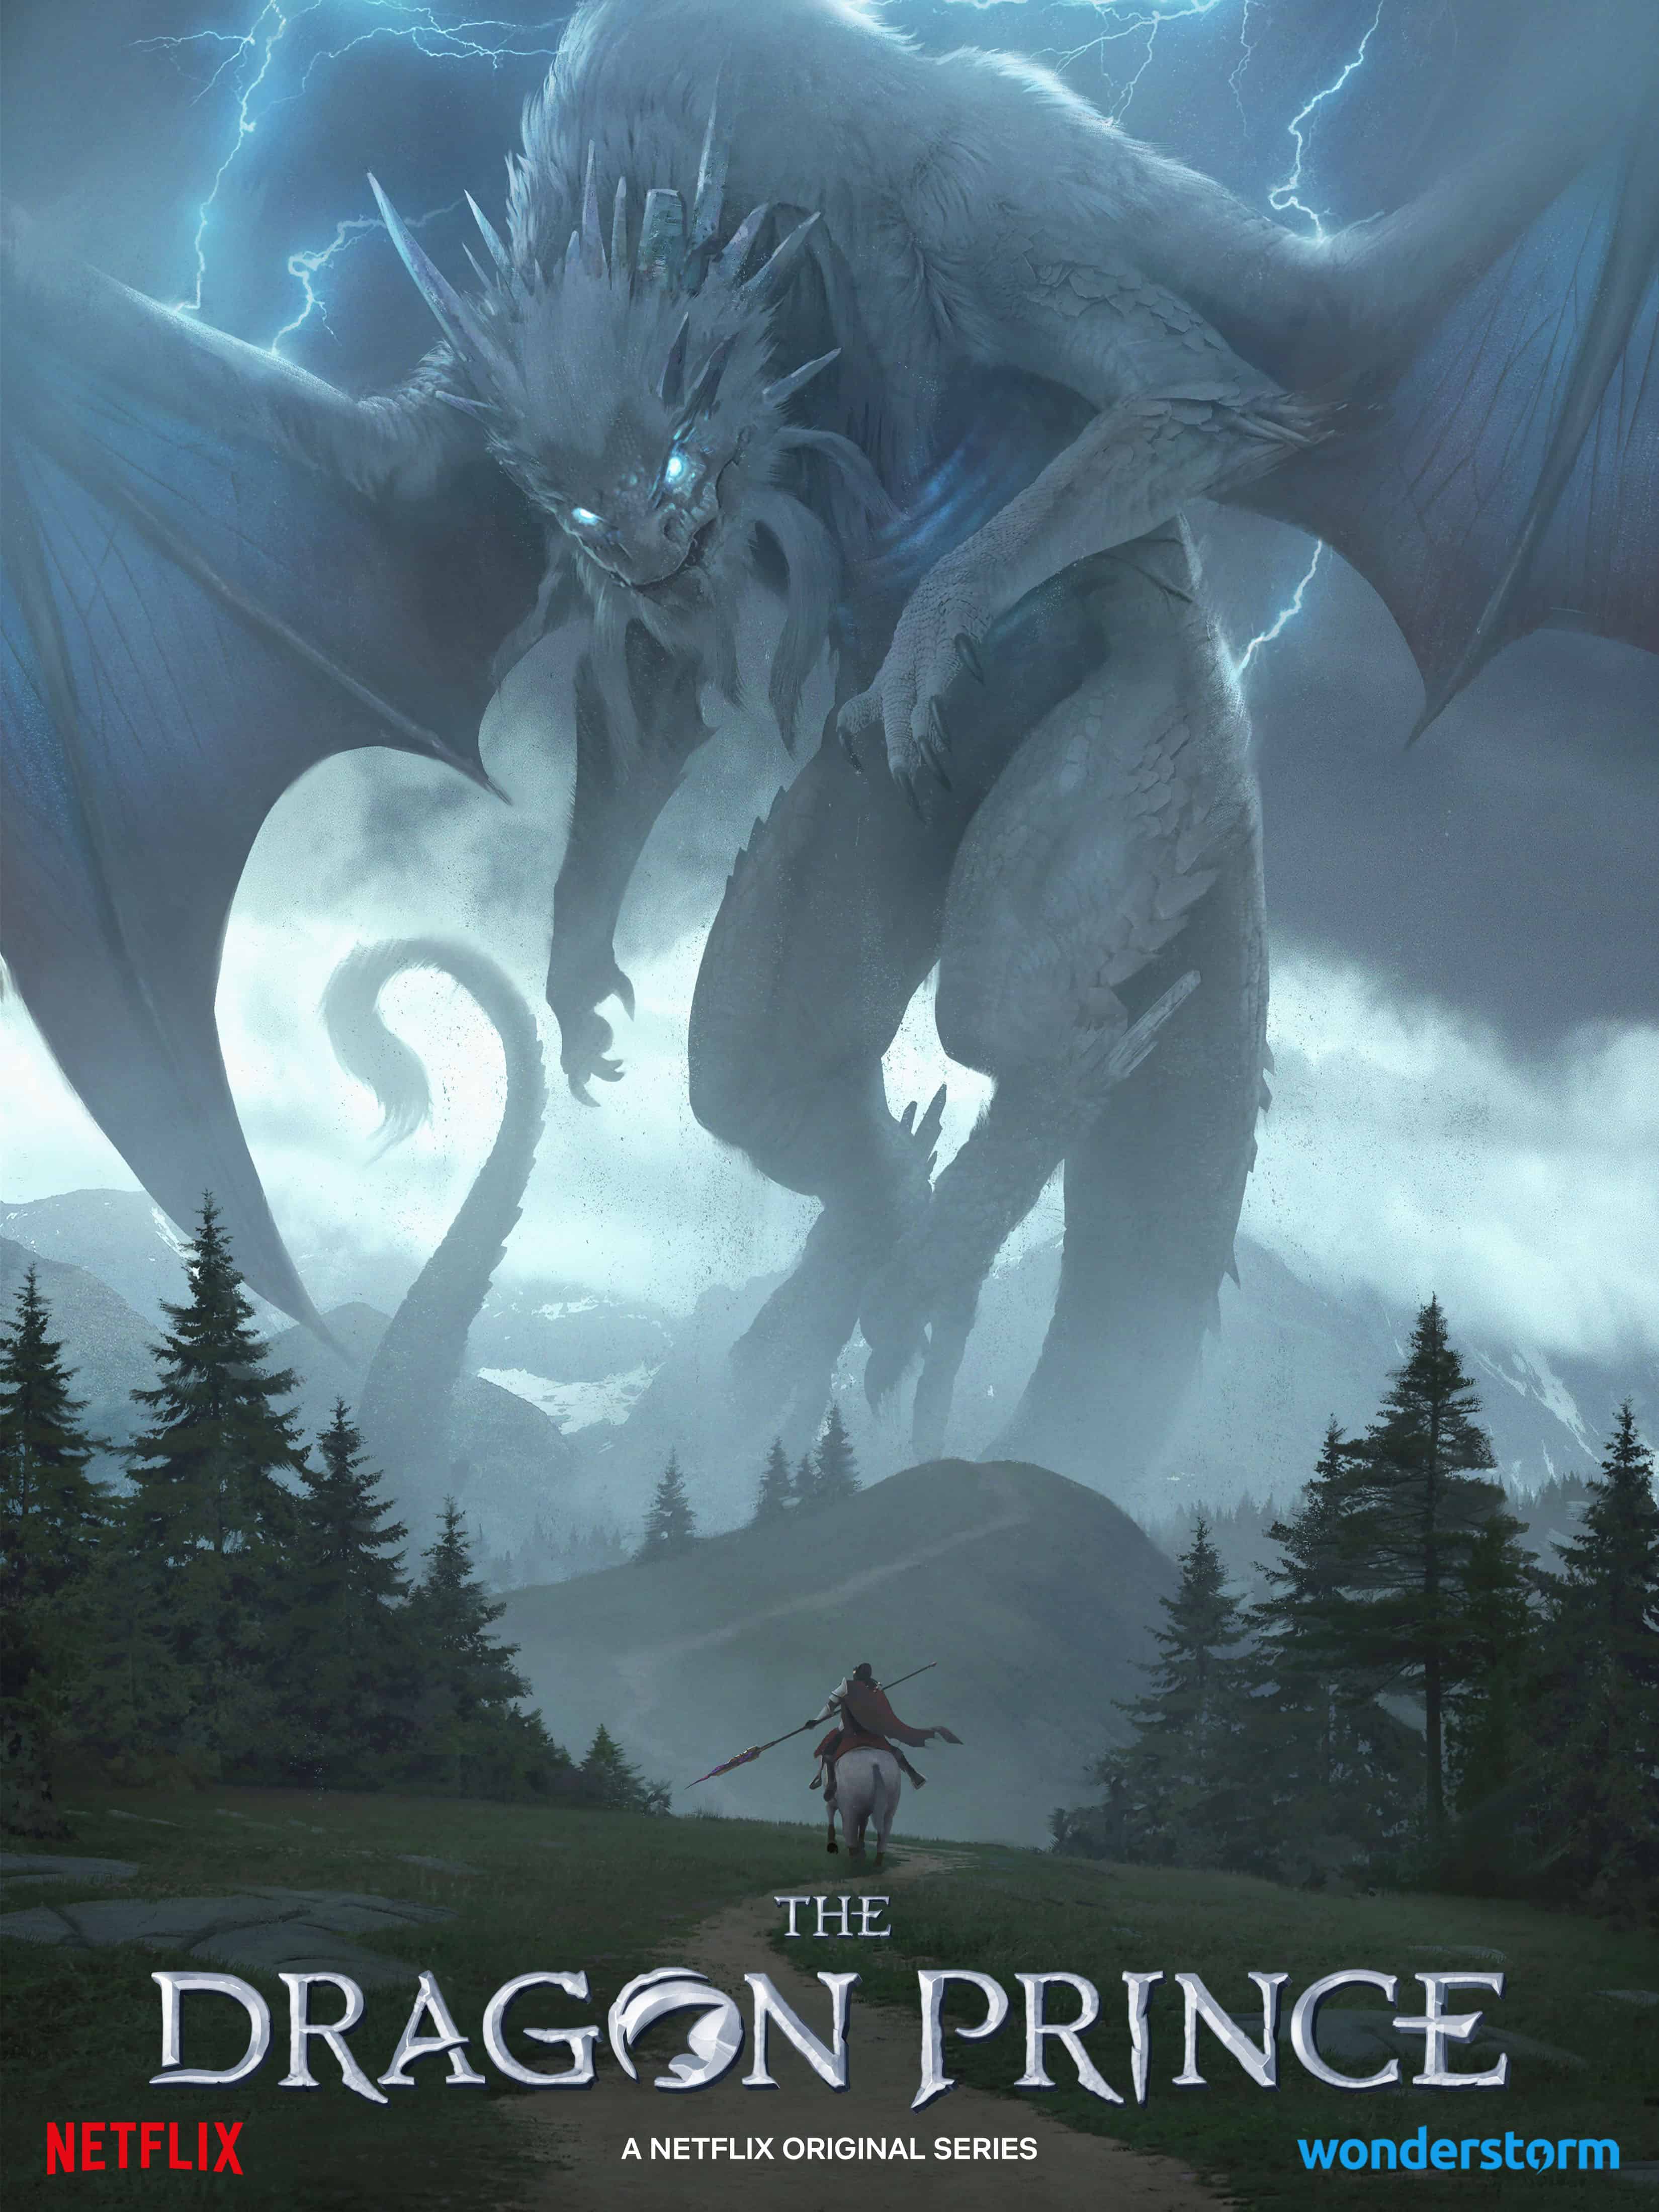 The Dragon Prince Season 3 arrives November 22!